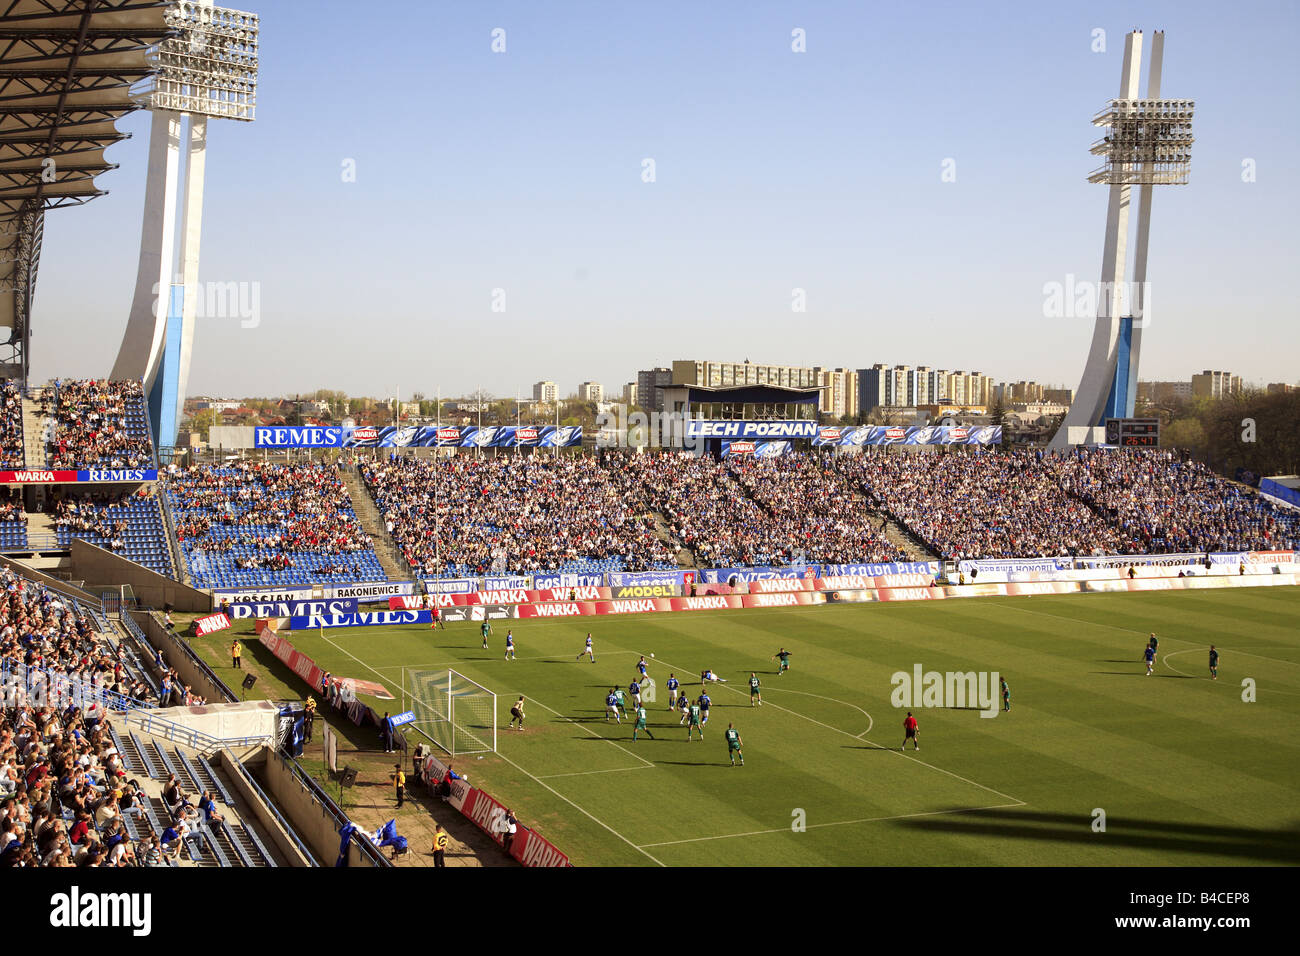 Stadium of a Polish premier league team Lech Poznan, during a home game, Poland Stock Photo